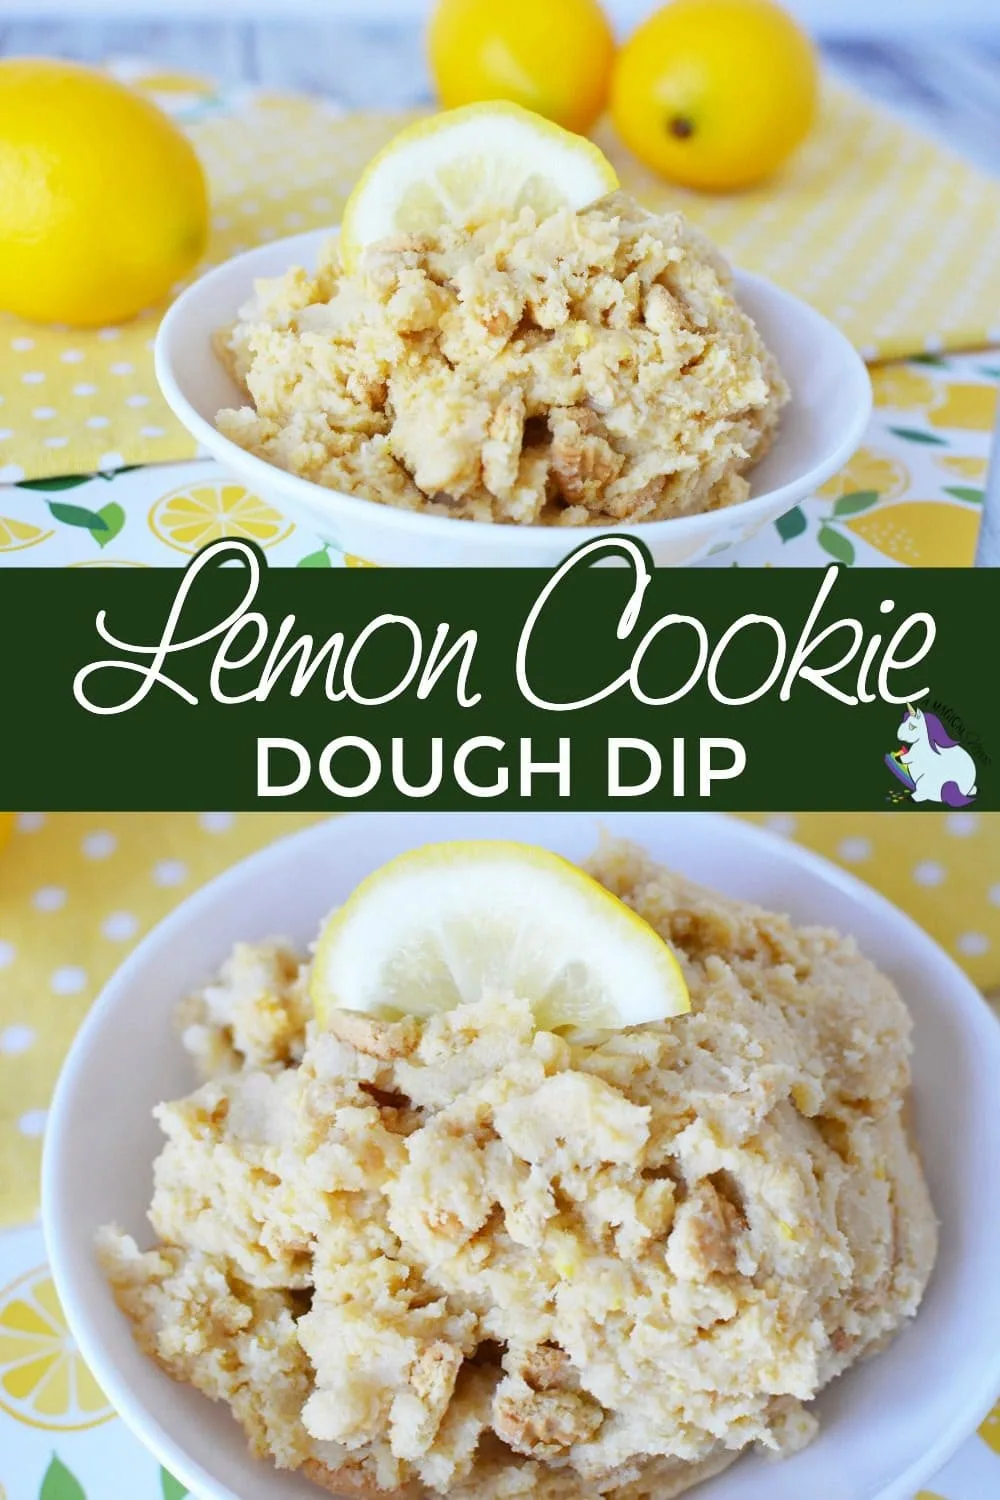 Lemon cookie dough dip in a bowl